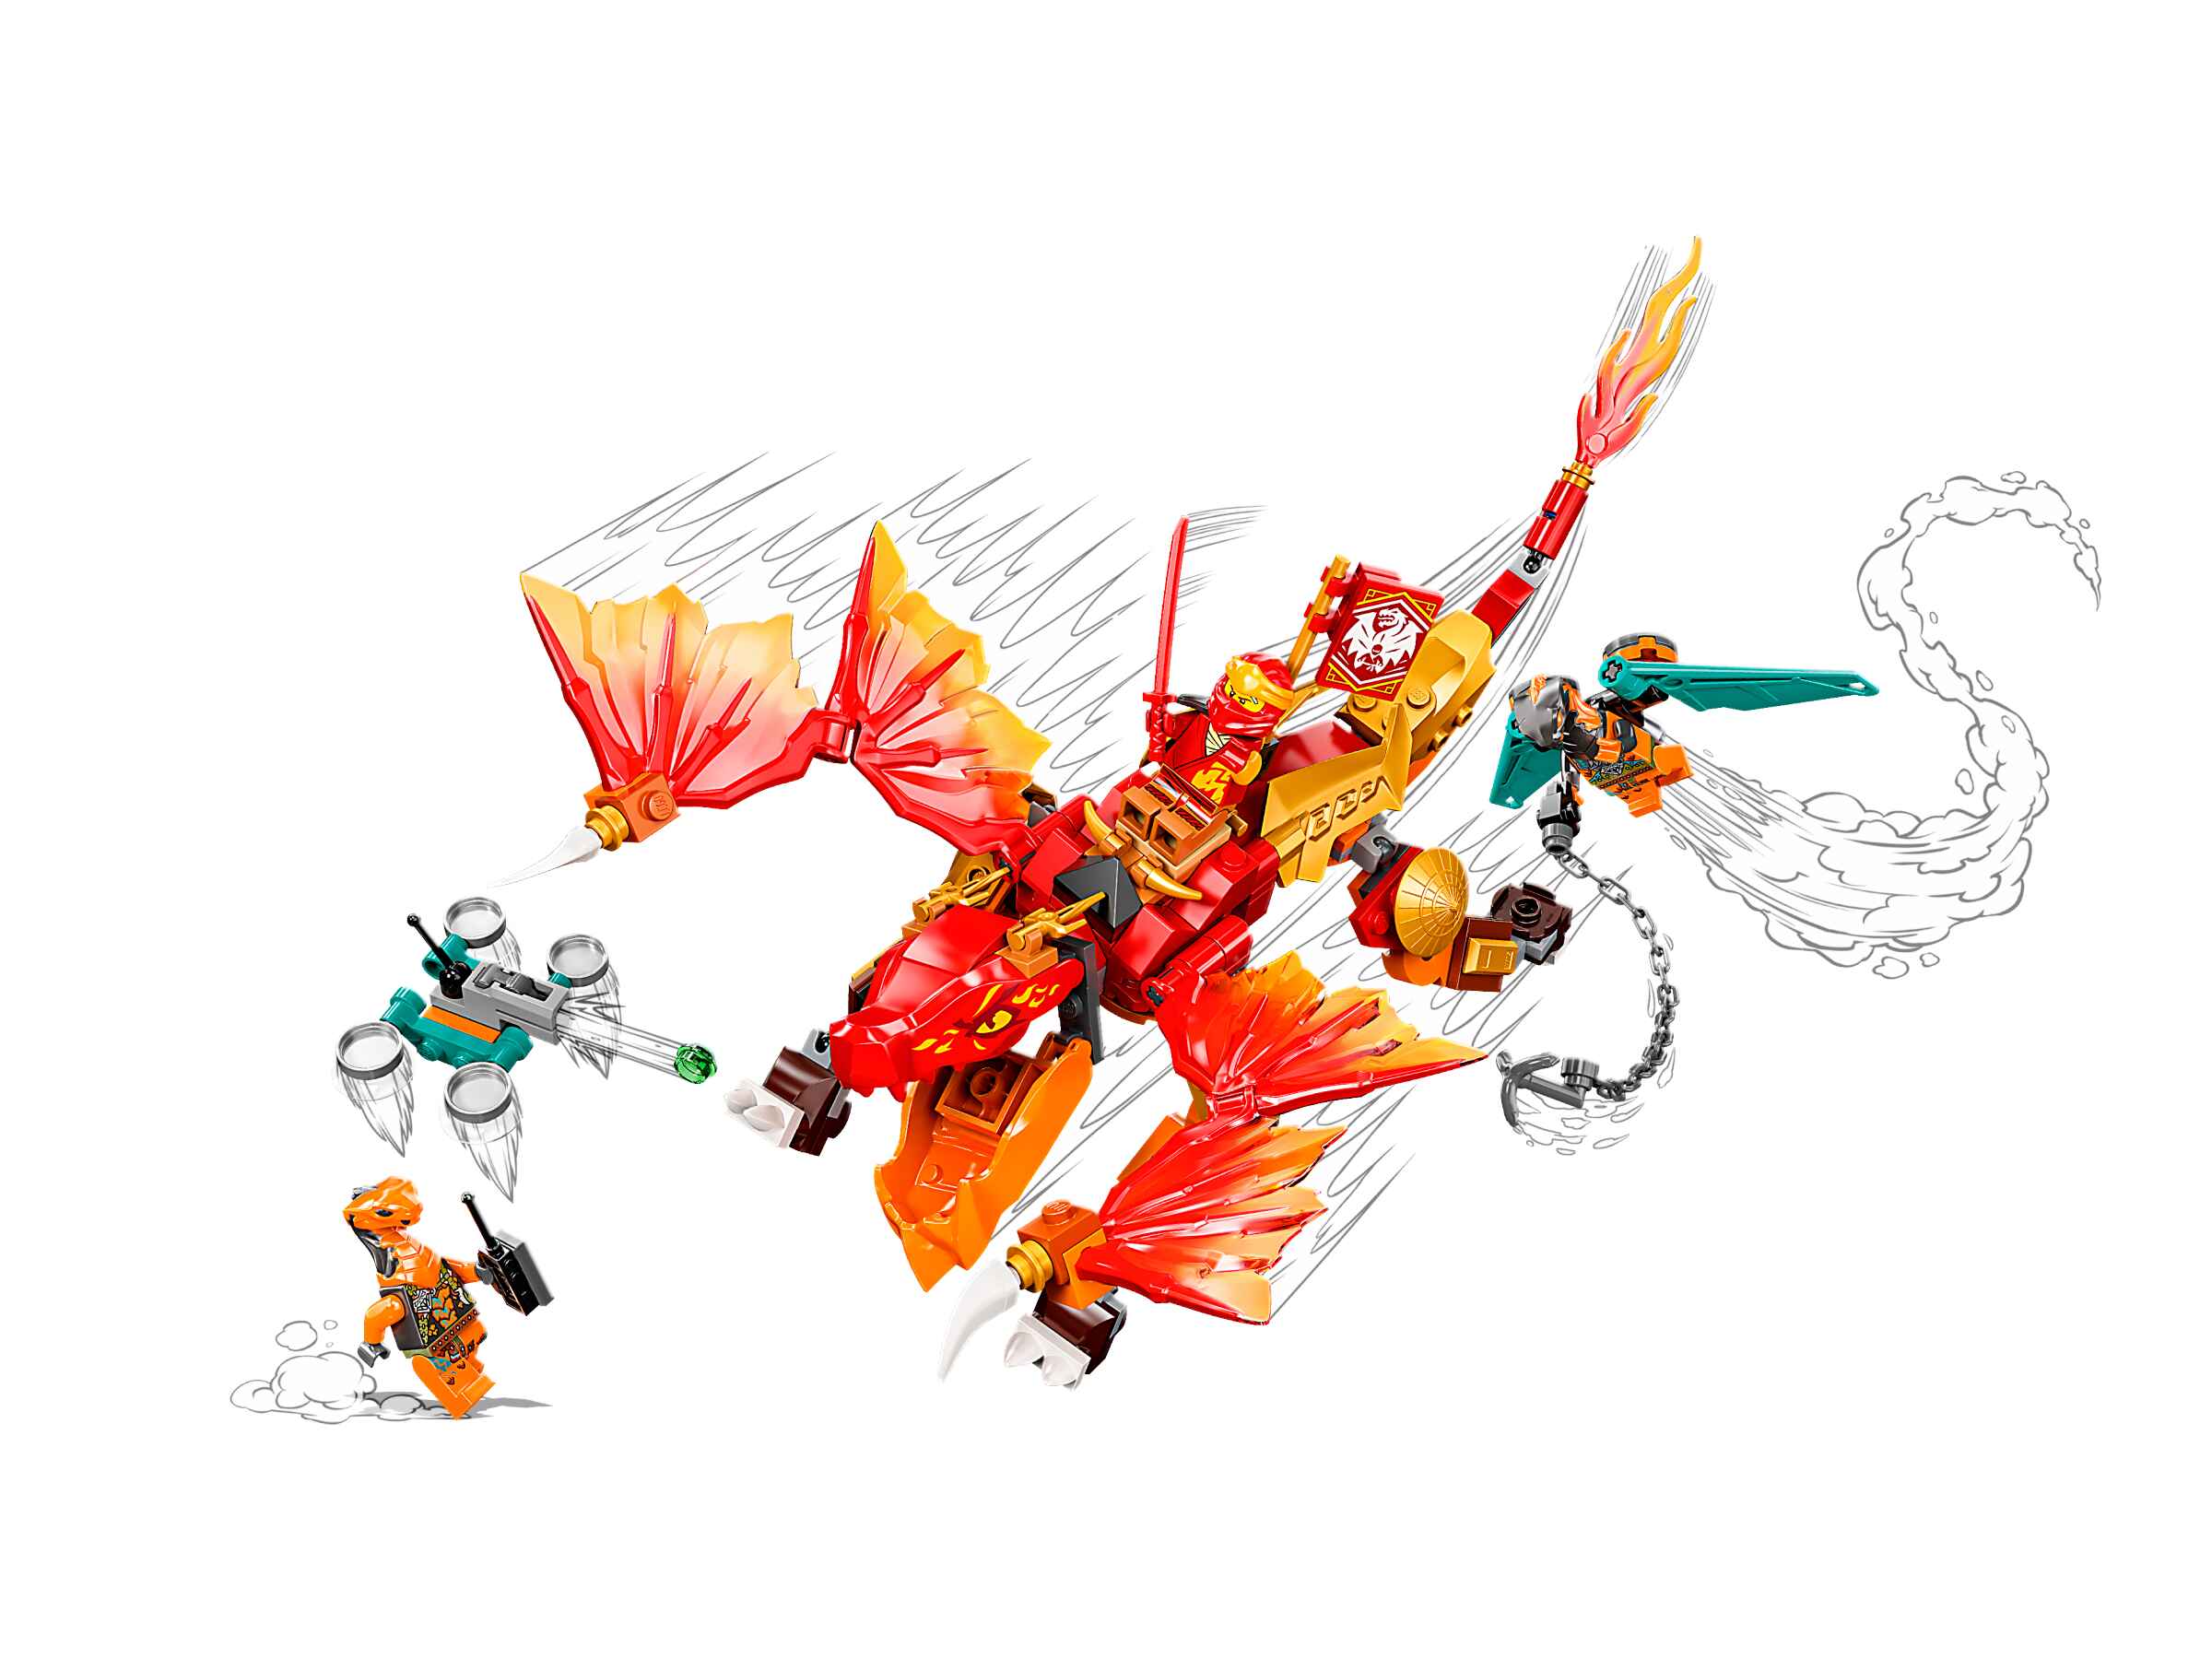 LEGO 71762 NINJAGO Kais Feuerdrache EVO, Kai,  Boa-Jäger, Kobra-Mech 